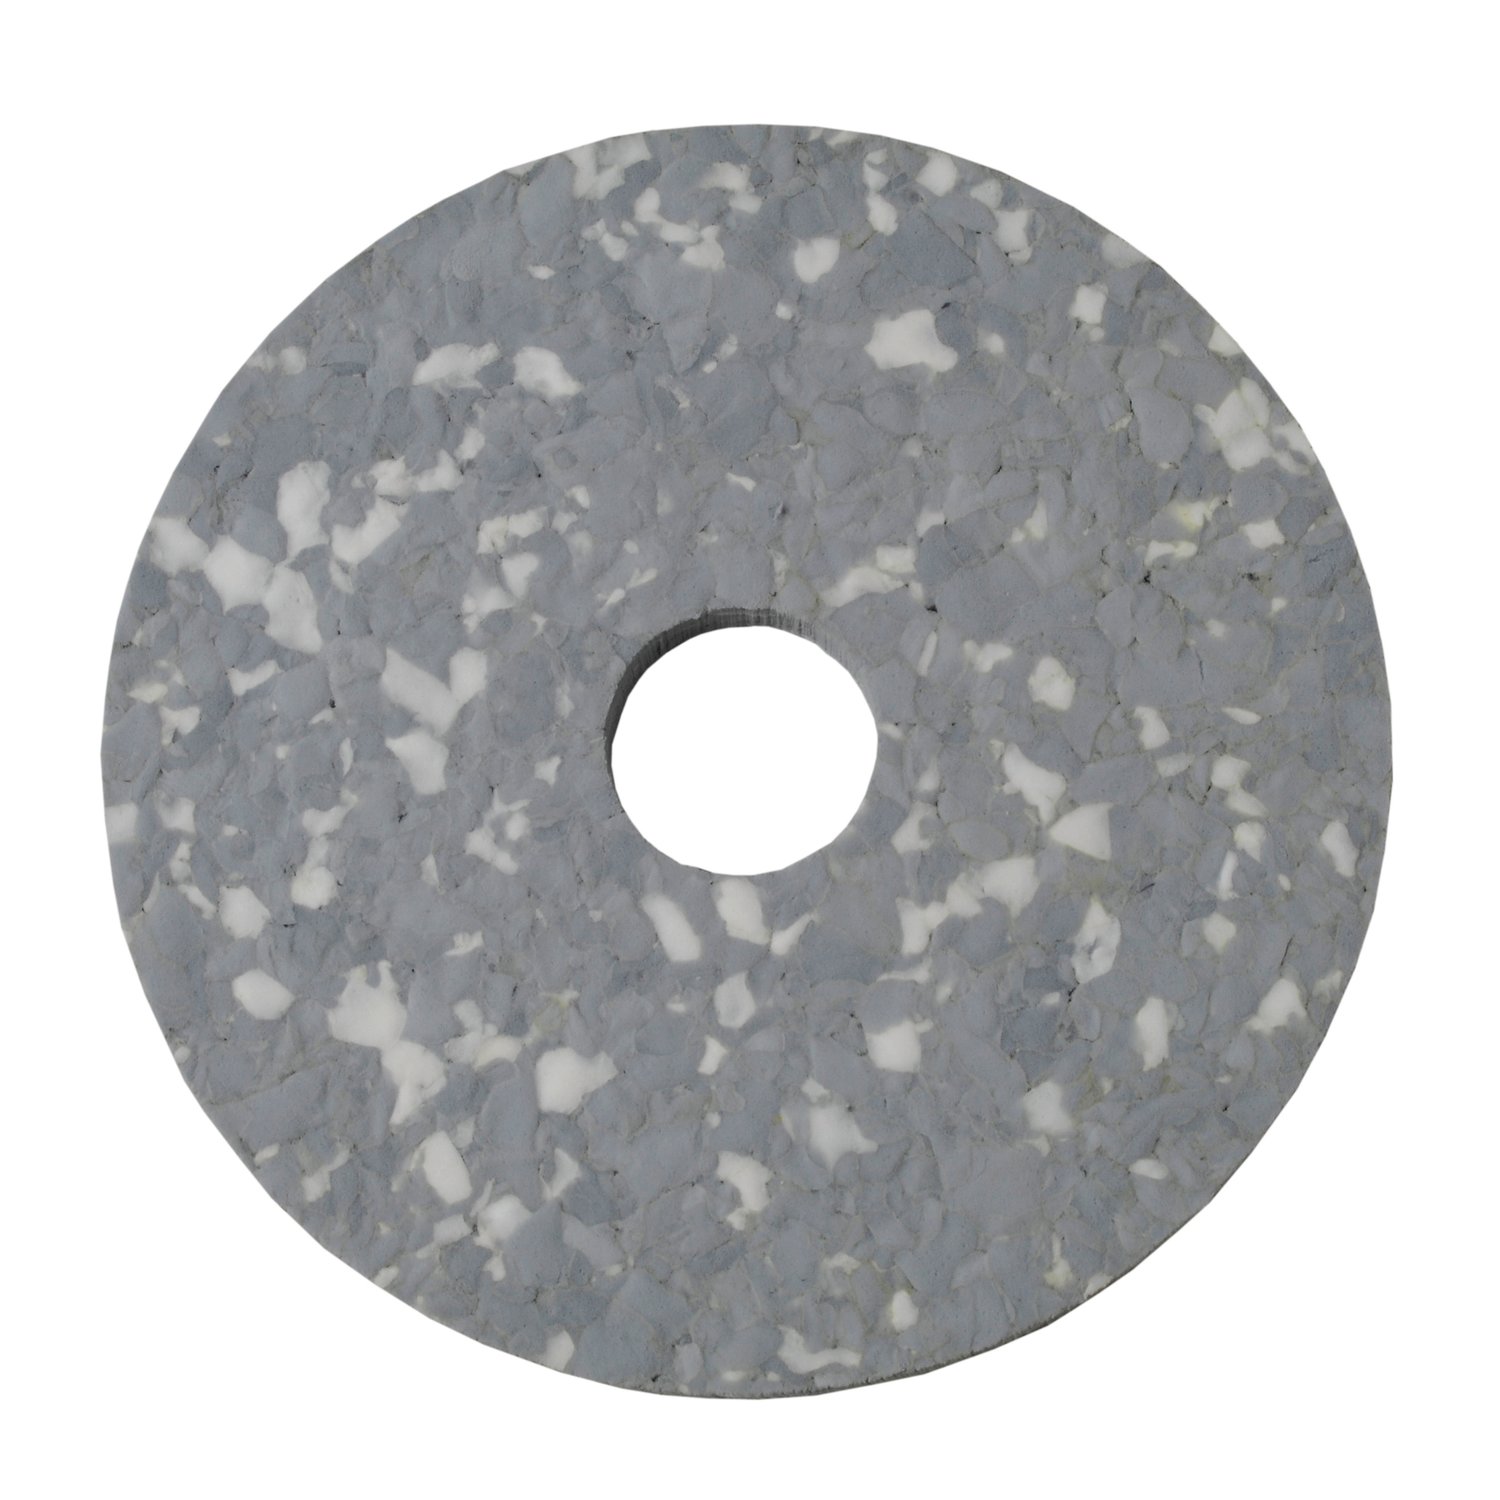 7000062726 - 3M Melamine Floor Pad, Grey/White, 330 mm, 5/Case